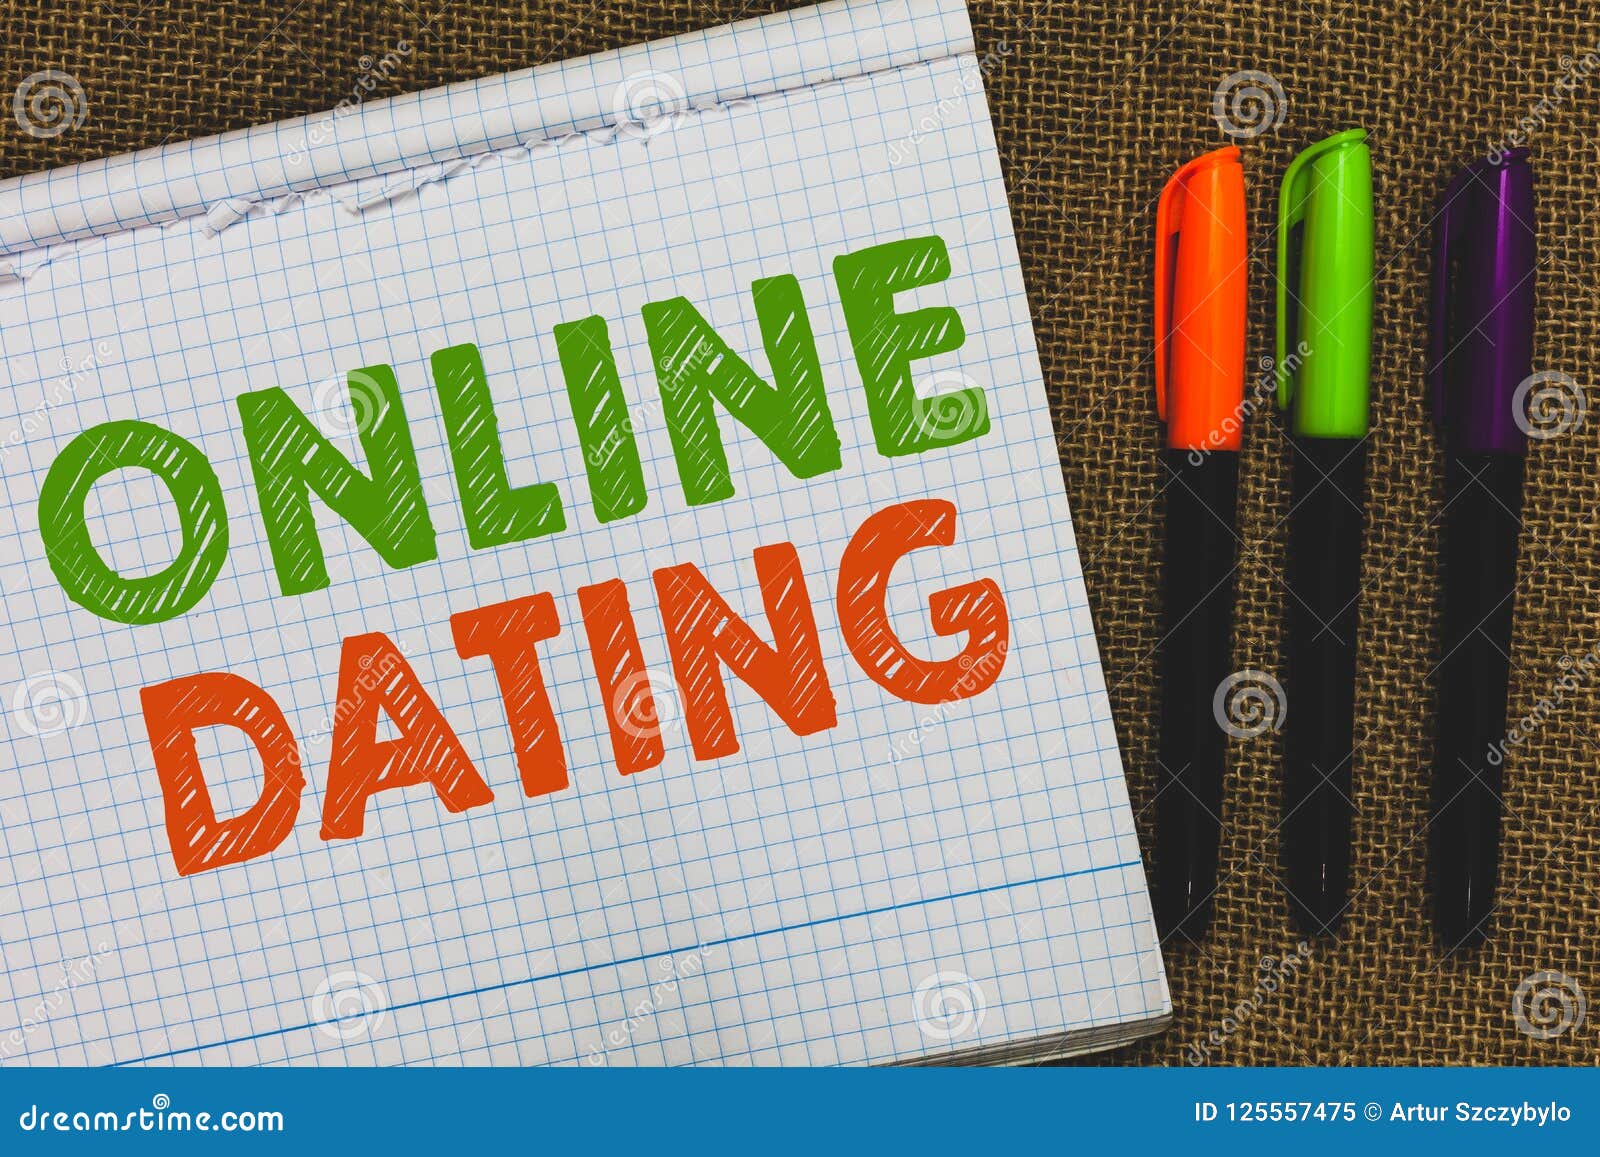 Get an Absolute Online Dating Business Solution - Originate Soft